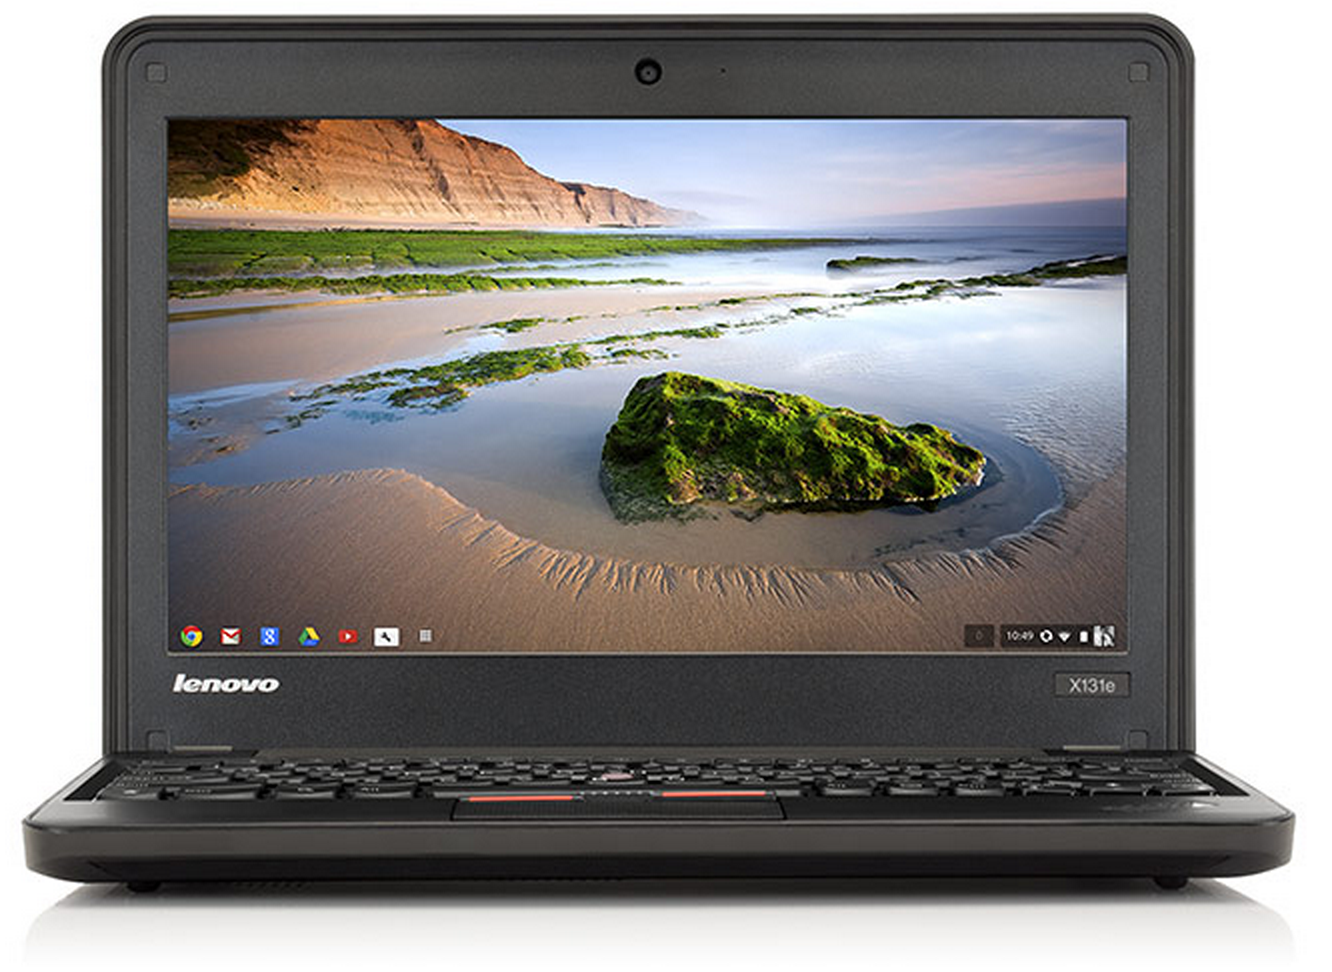 Lenovo's first Chromebook, ThinkPad X131e, launches Feb. 26 for $429